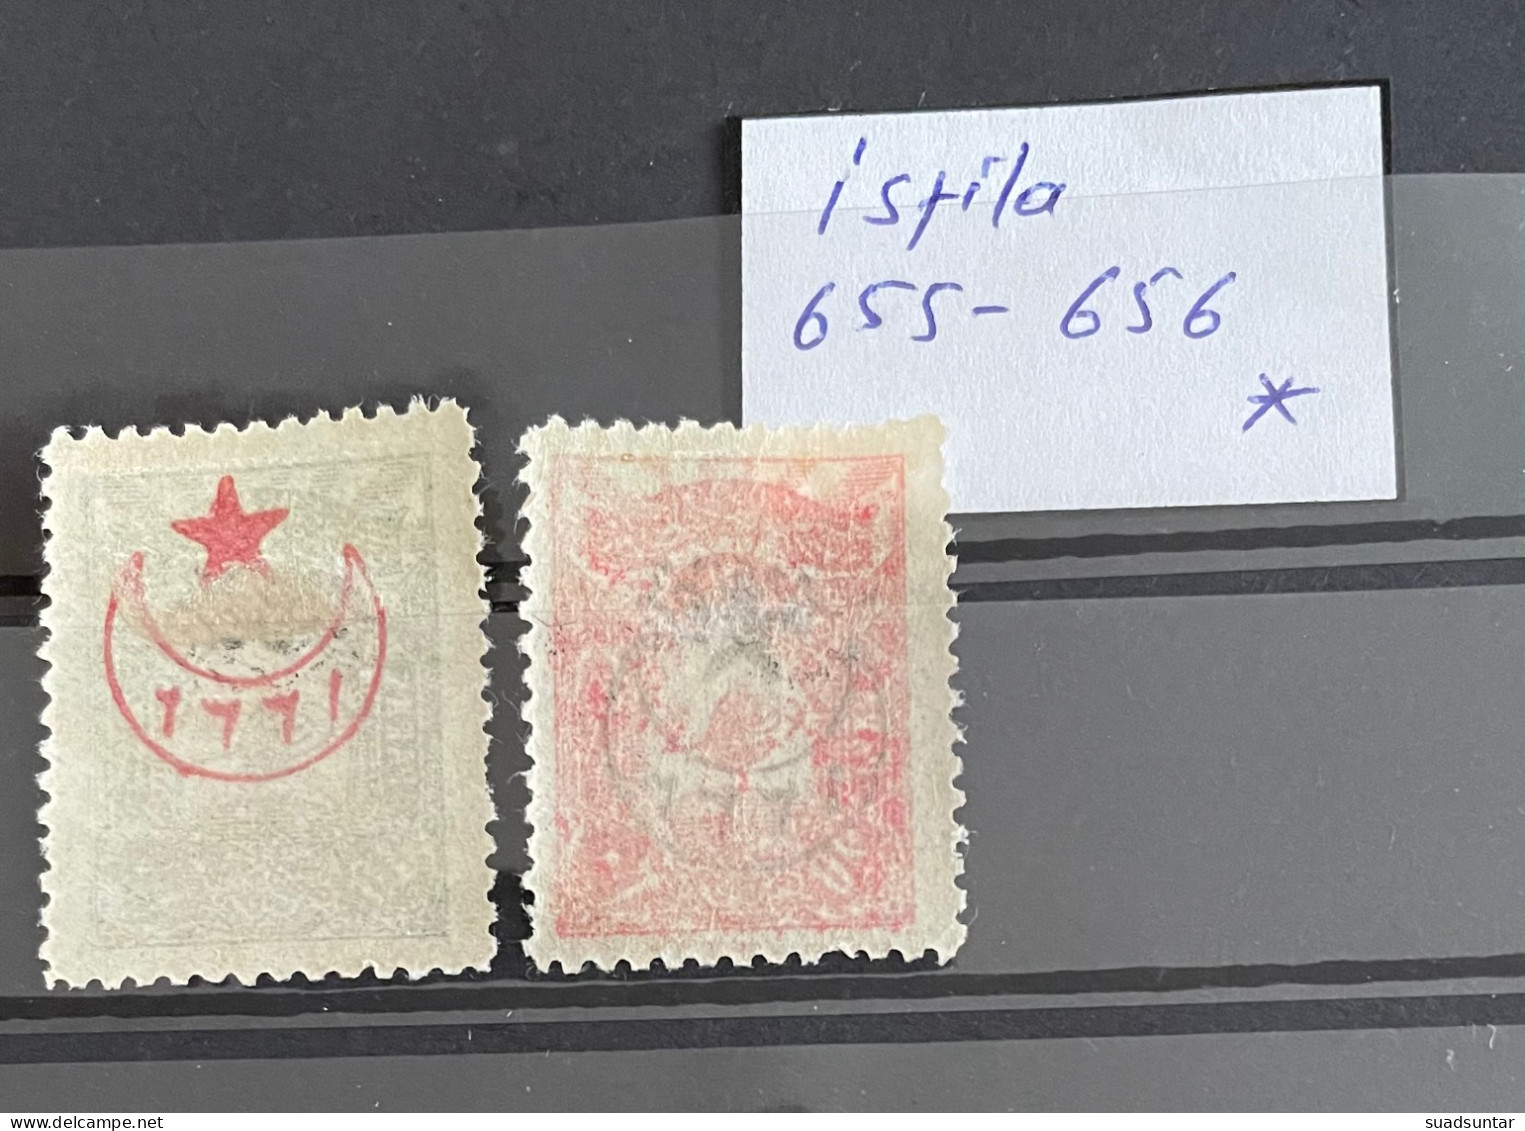 1916 5 Star Overprinted Stamps MH Isfila 655-656 High Values - Ongebruikt